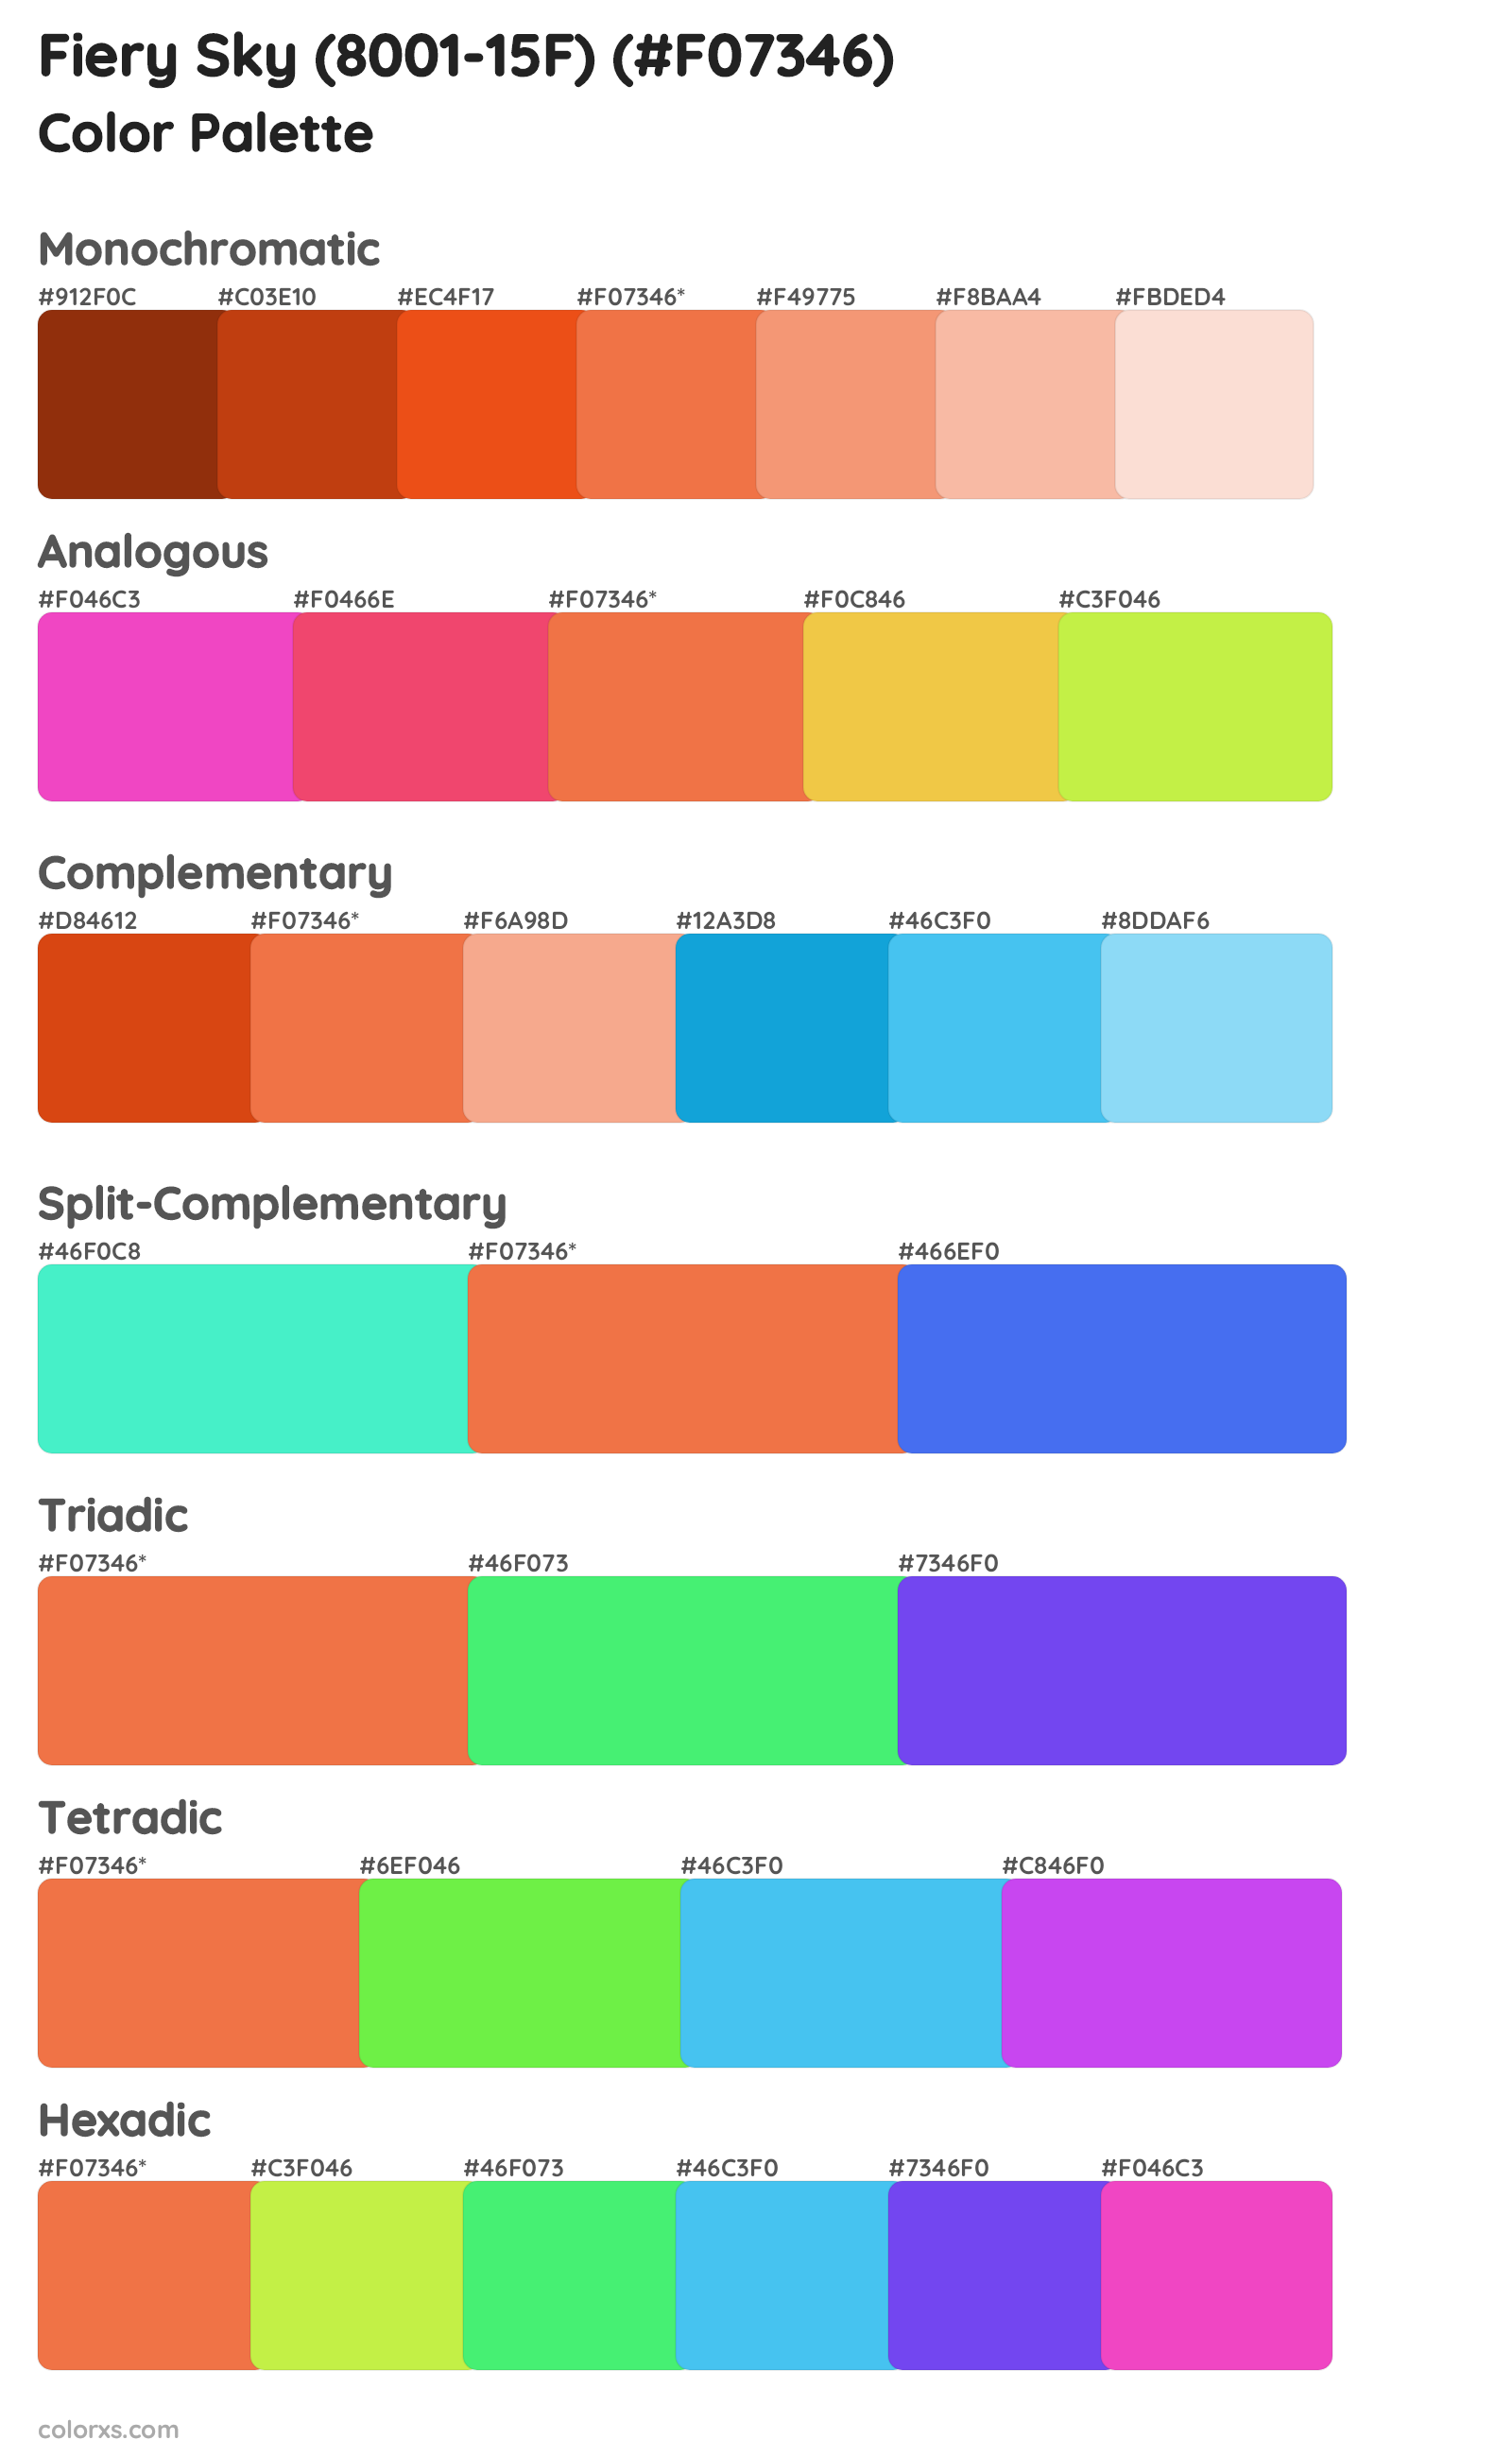 Fiery Sky (8001-15F) Color Scheme Palettes